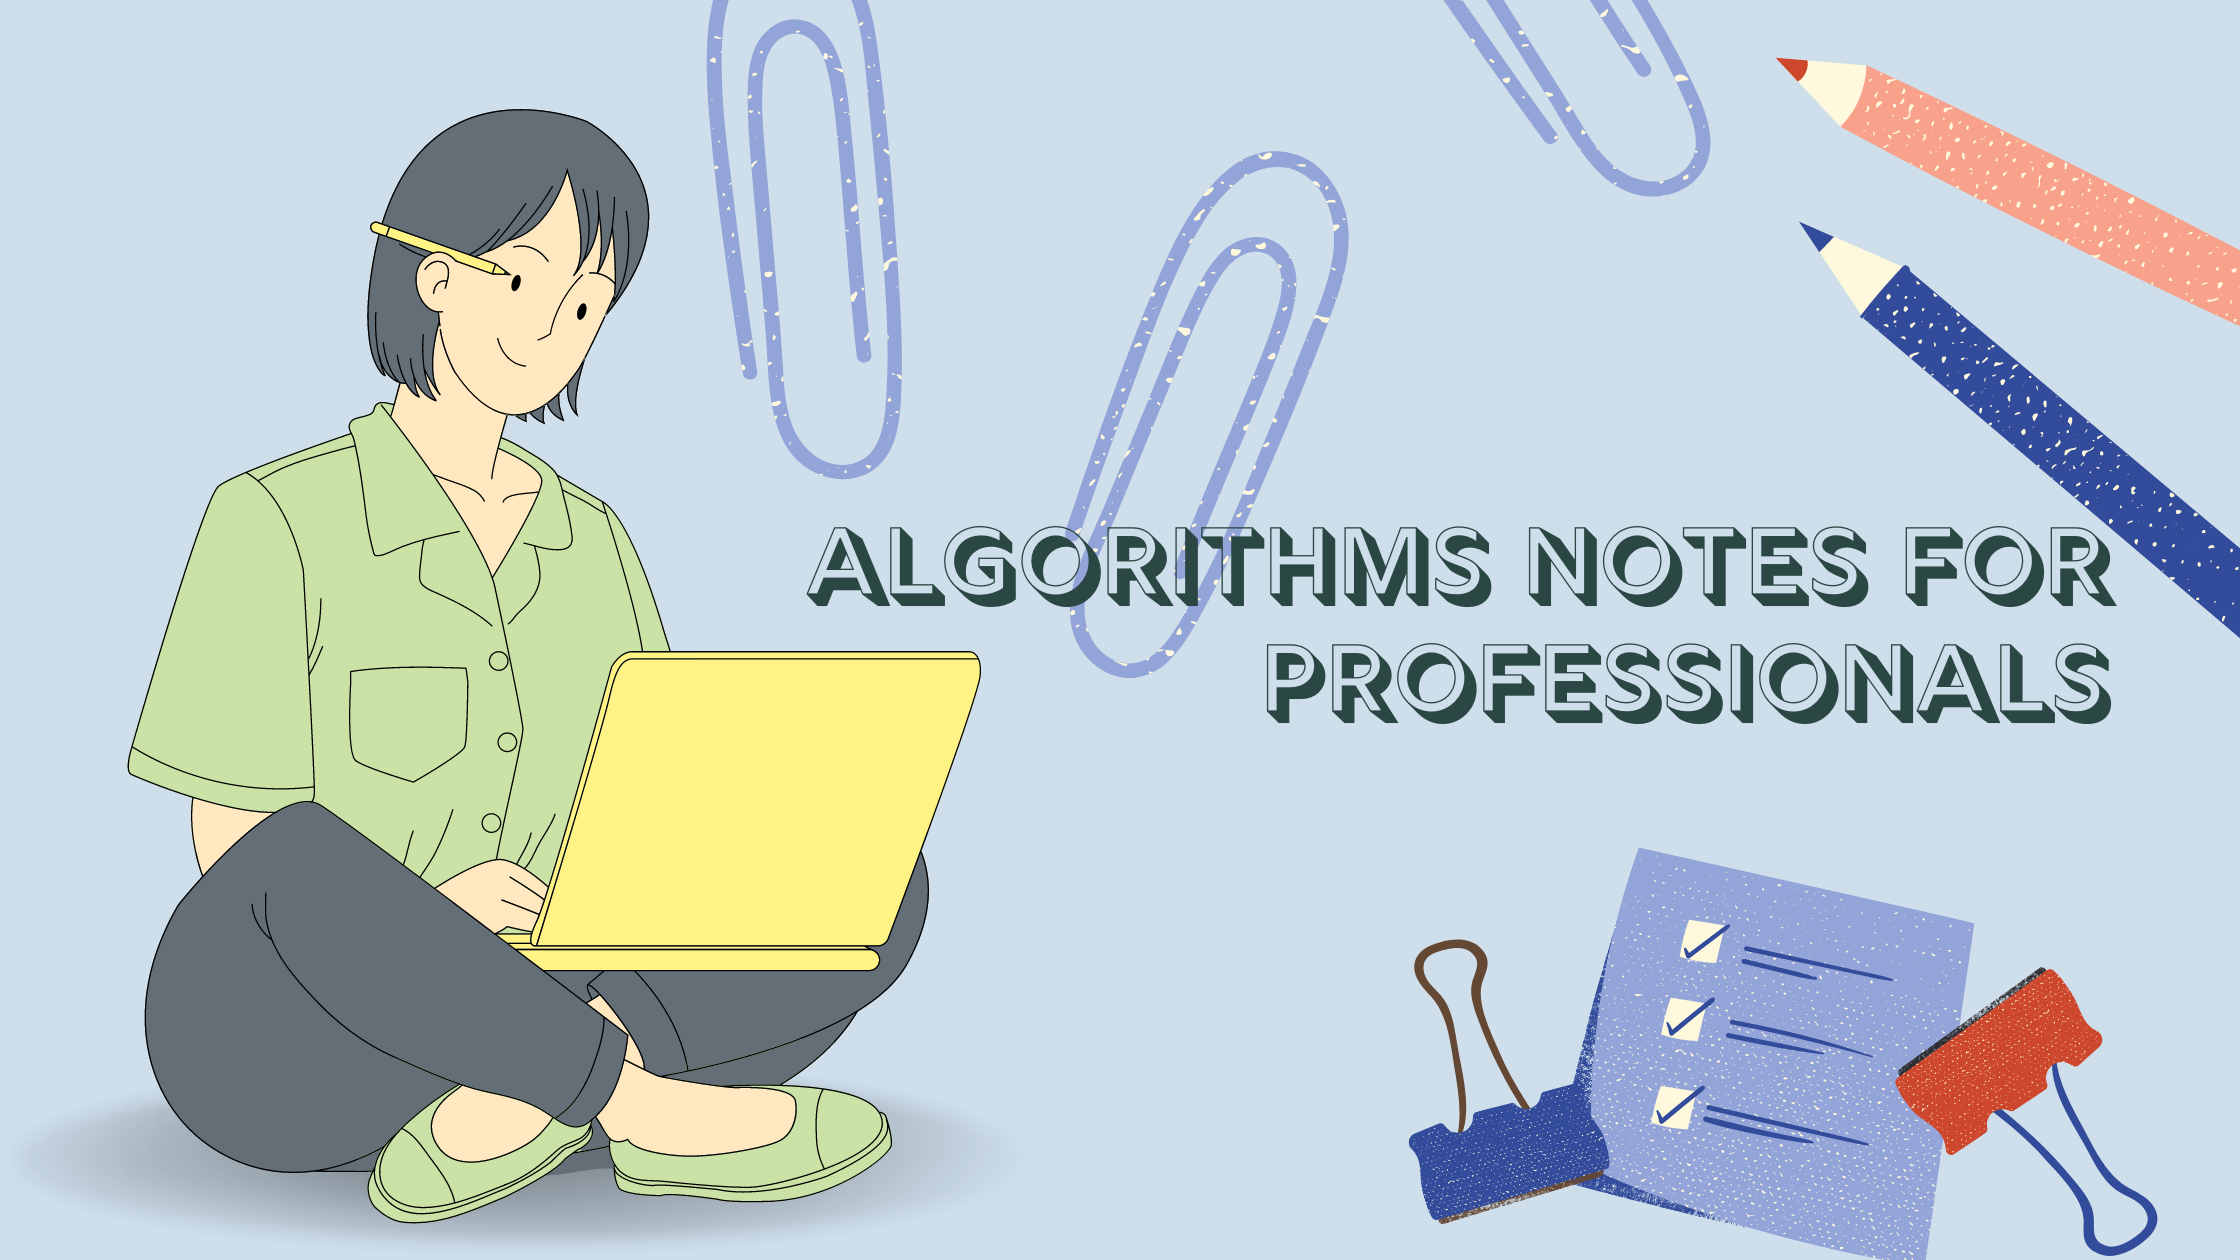  Algorithms Notes For Professionals